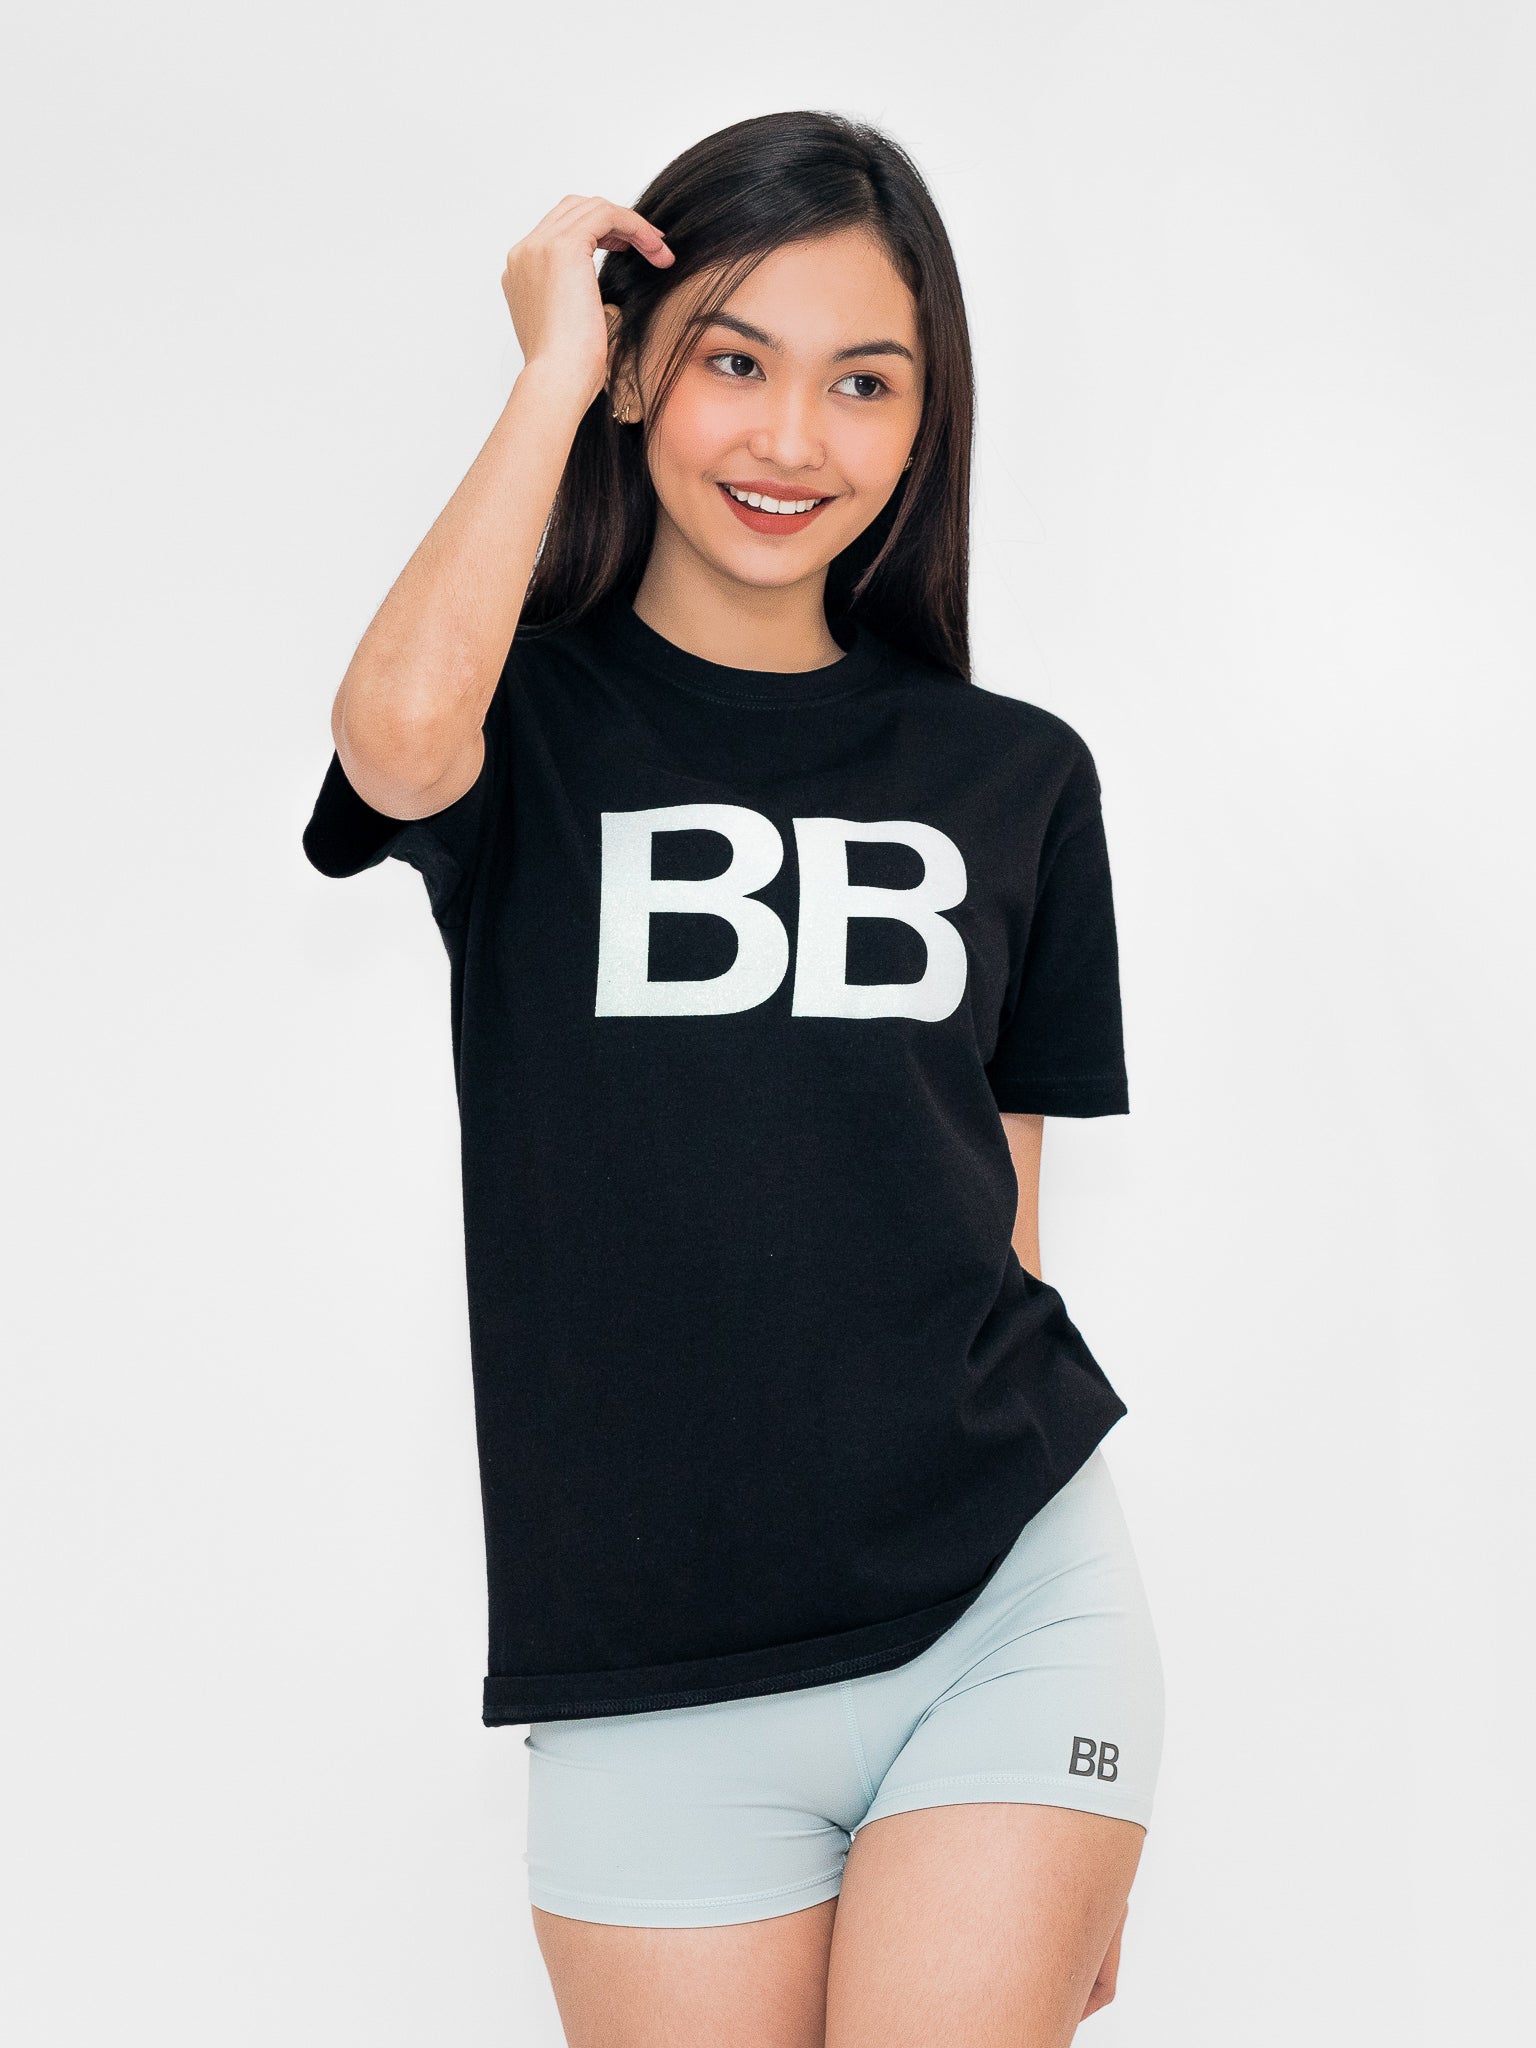 BB Sparkle Shirt